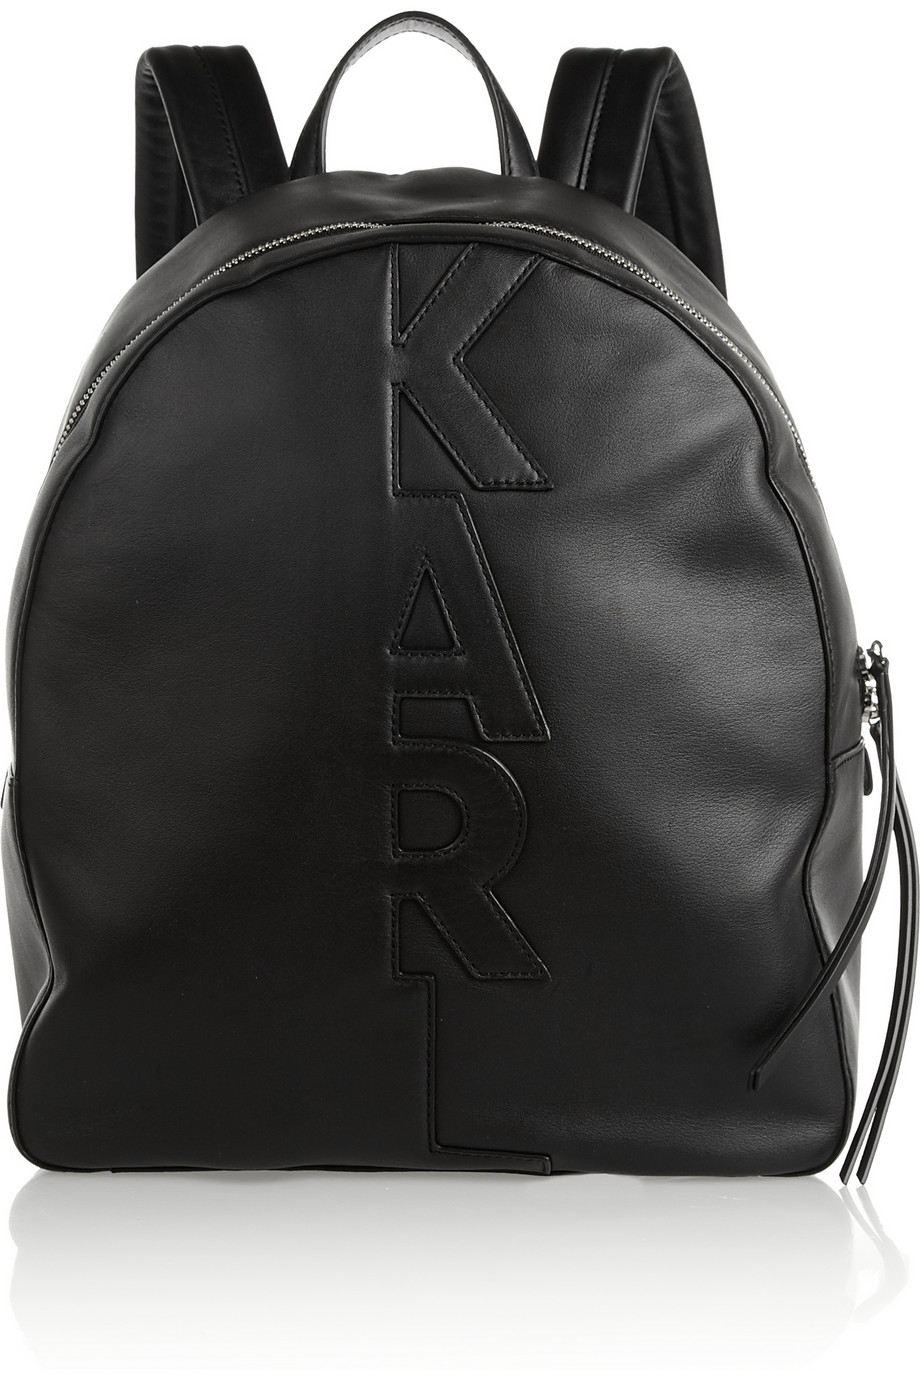 Lyst - Karl Lagerfeld Appliquéd Leather Backpack in Black